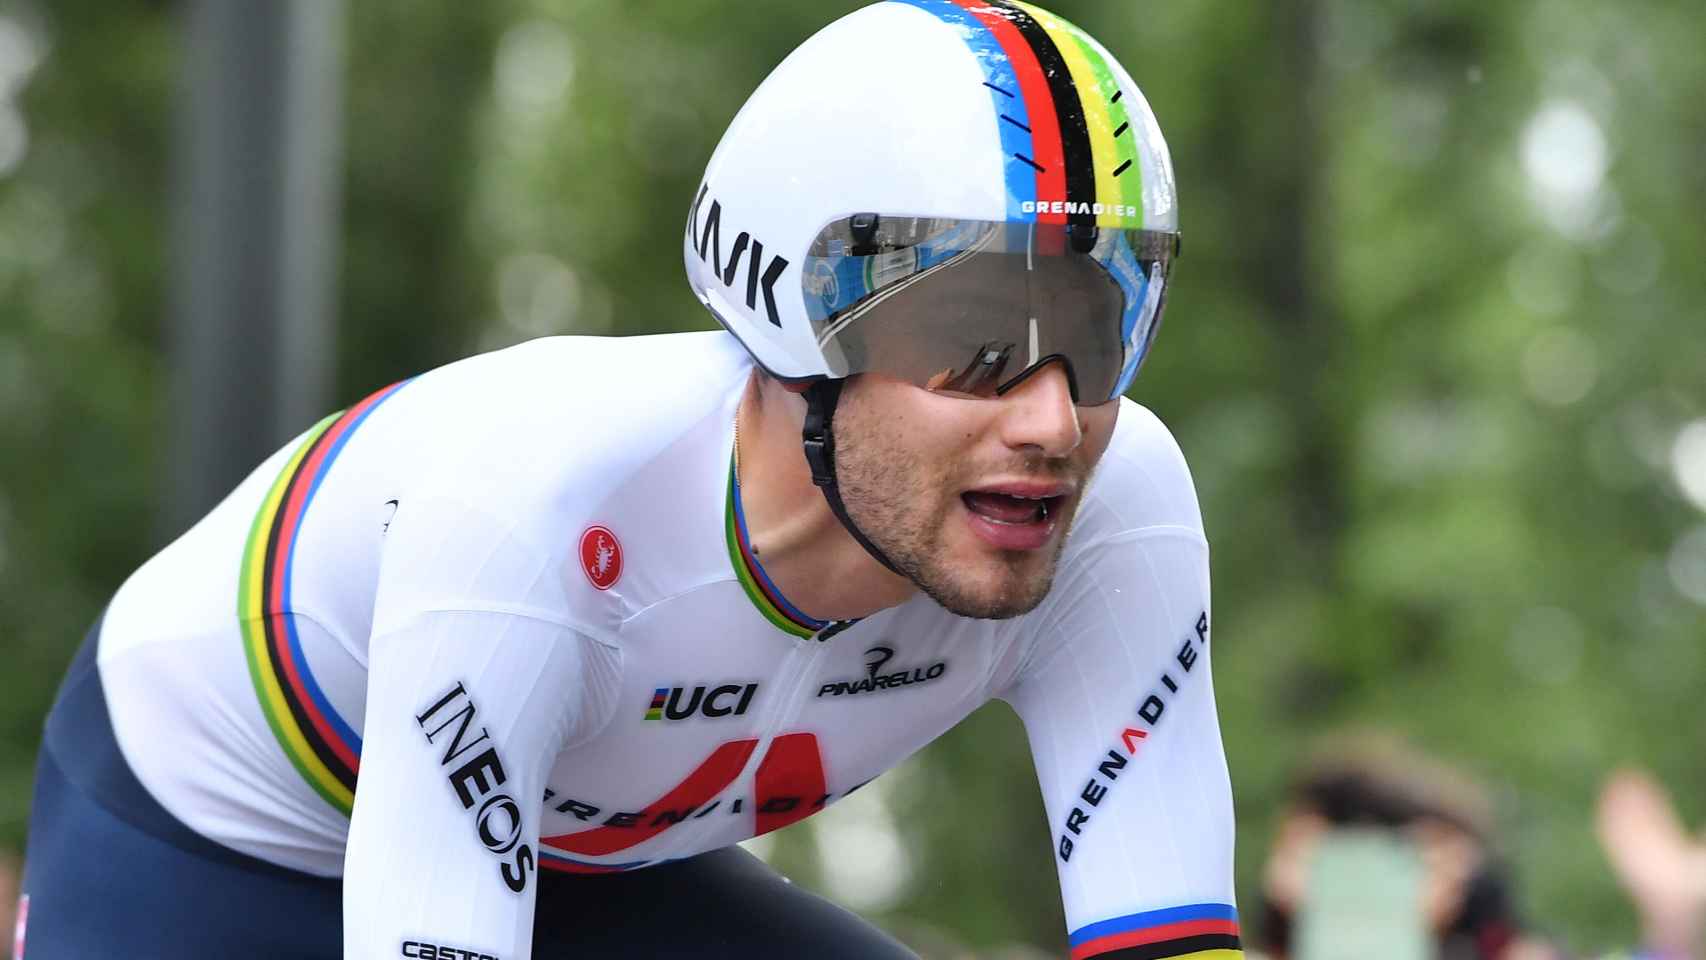 Ganna en la crono inaugural del Giro de Italia 2021